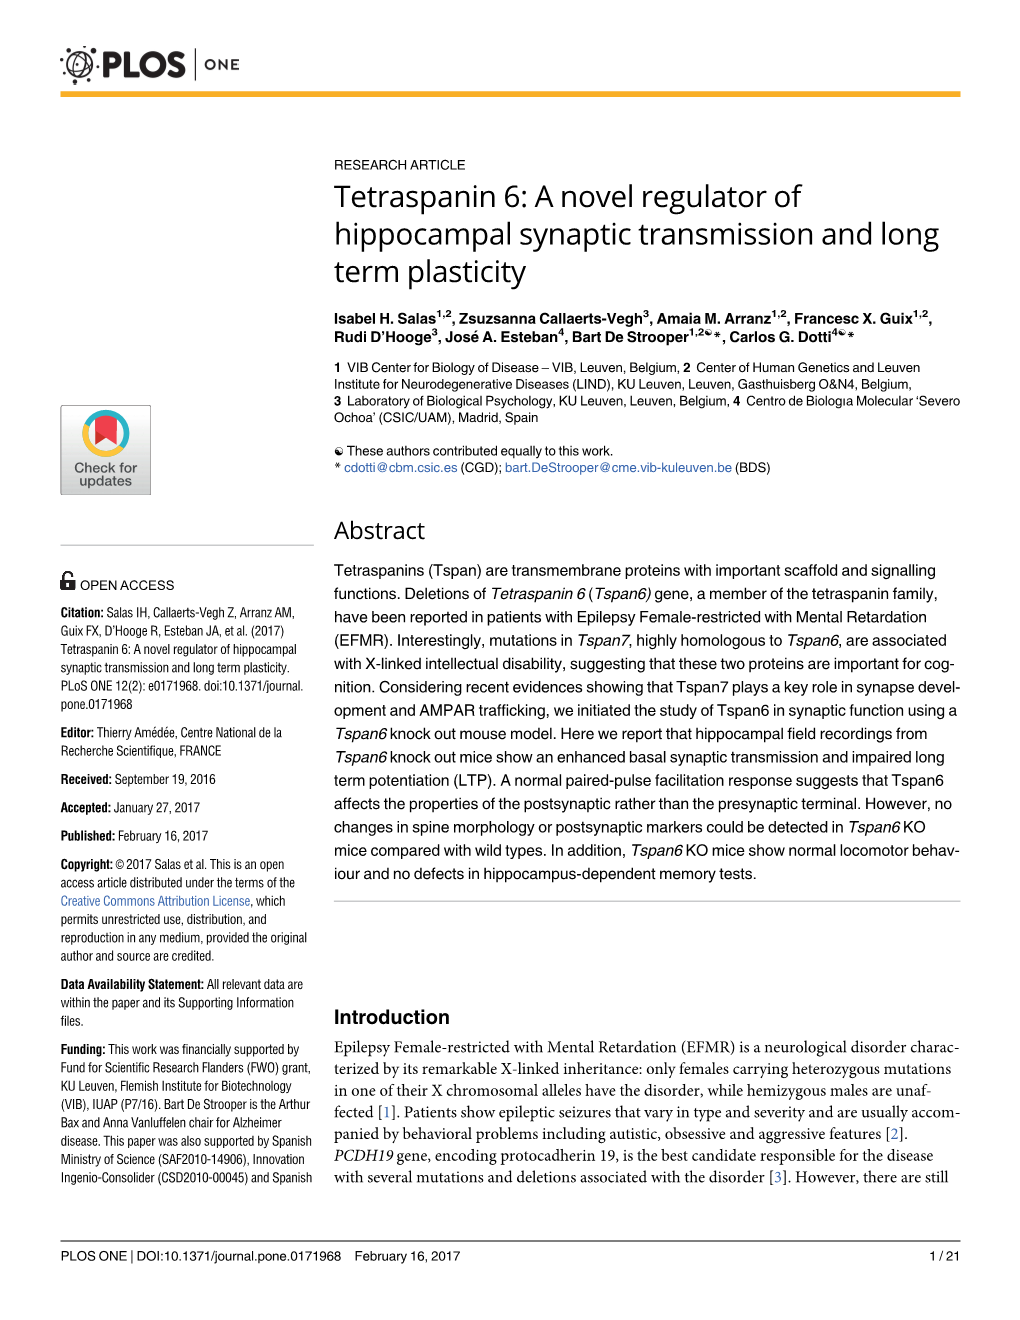 Tetraspanin 6: a Novel Regulator of Hippocampal Synaptic Transmission and Long Term Plasticity